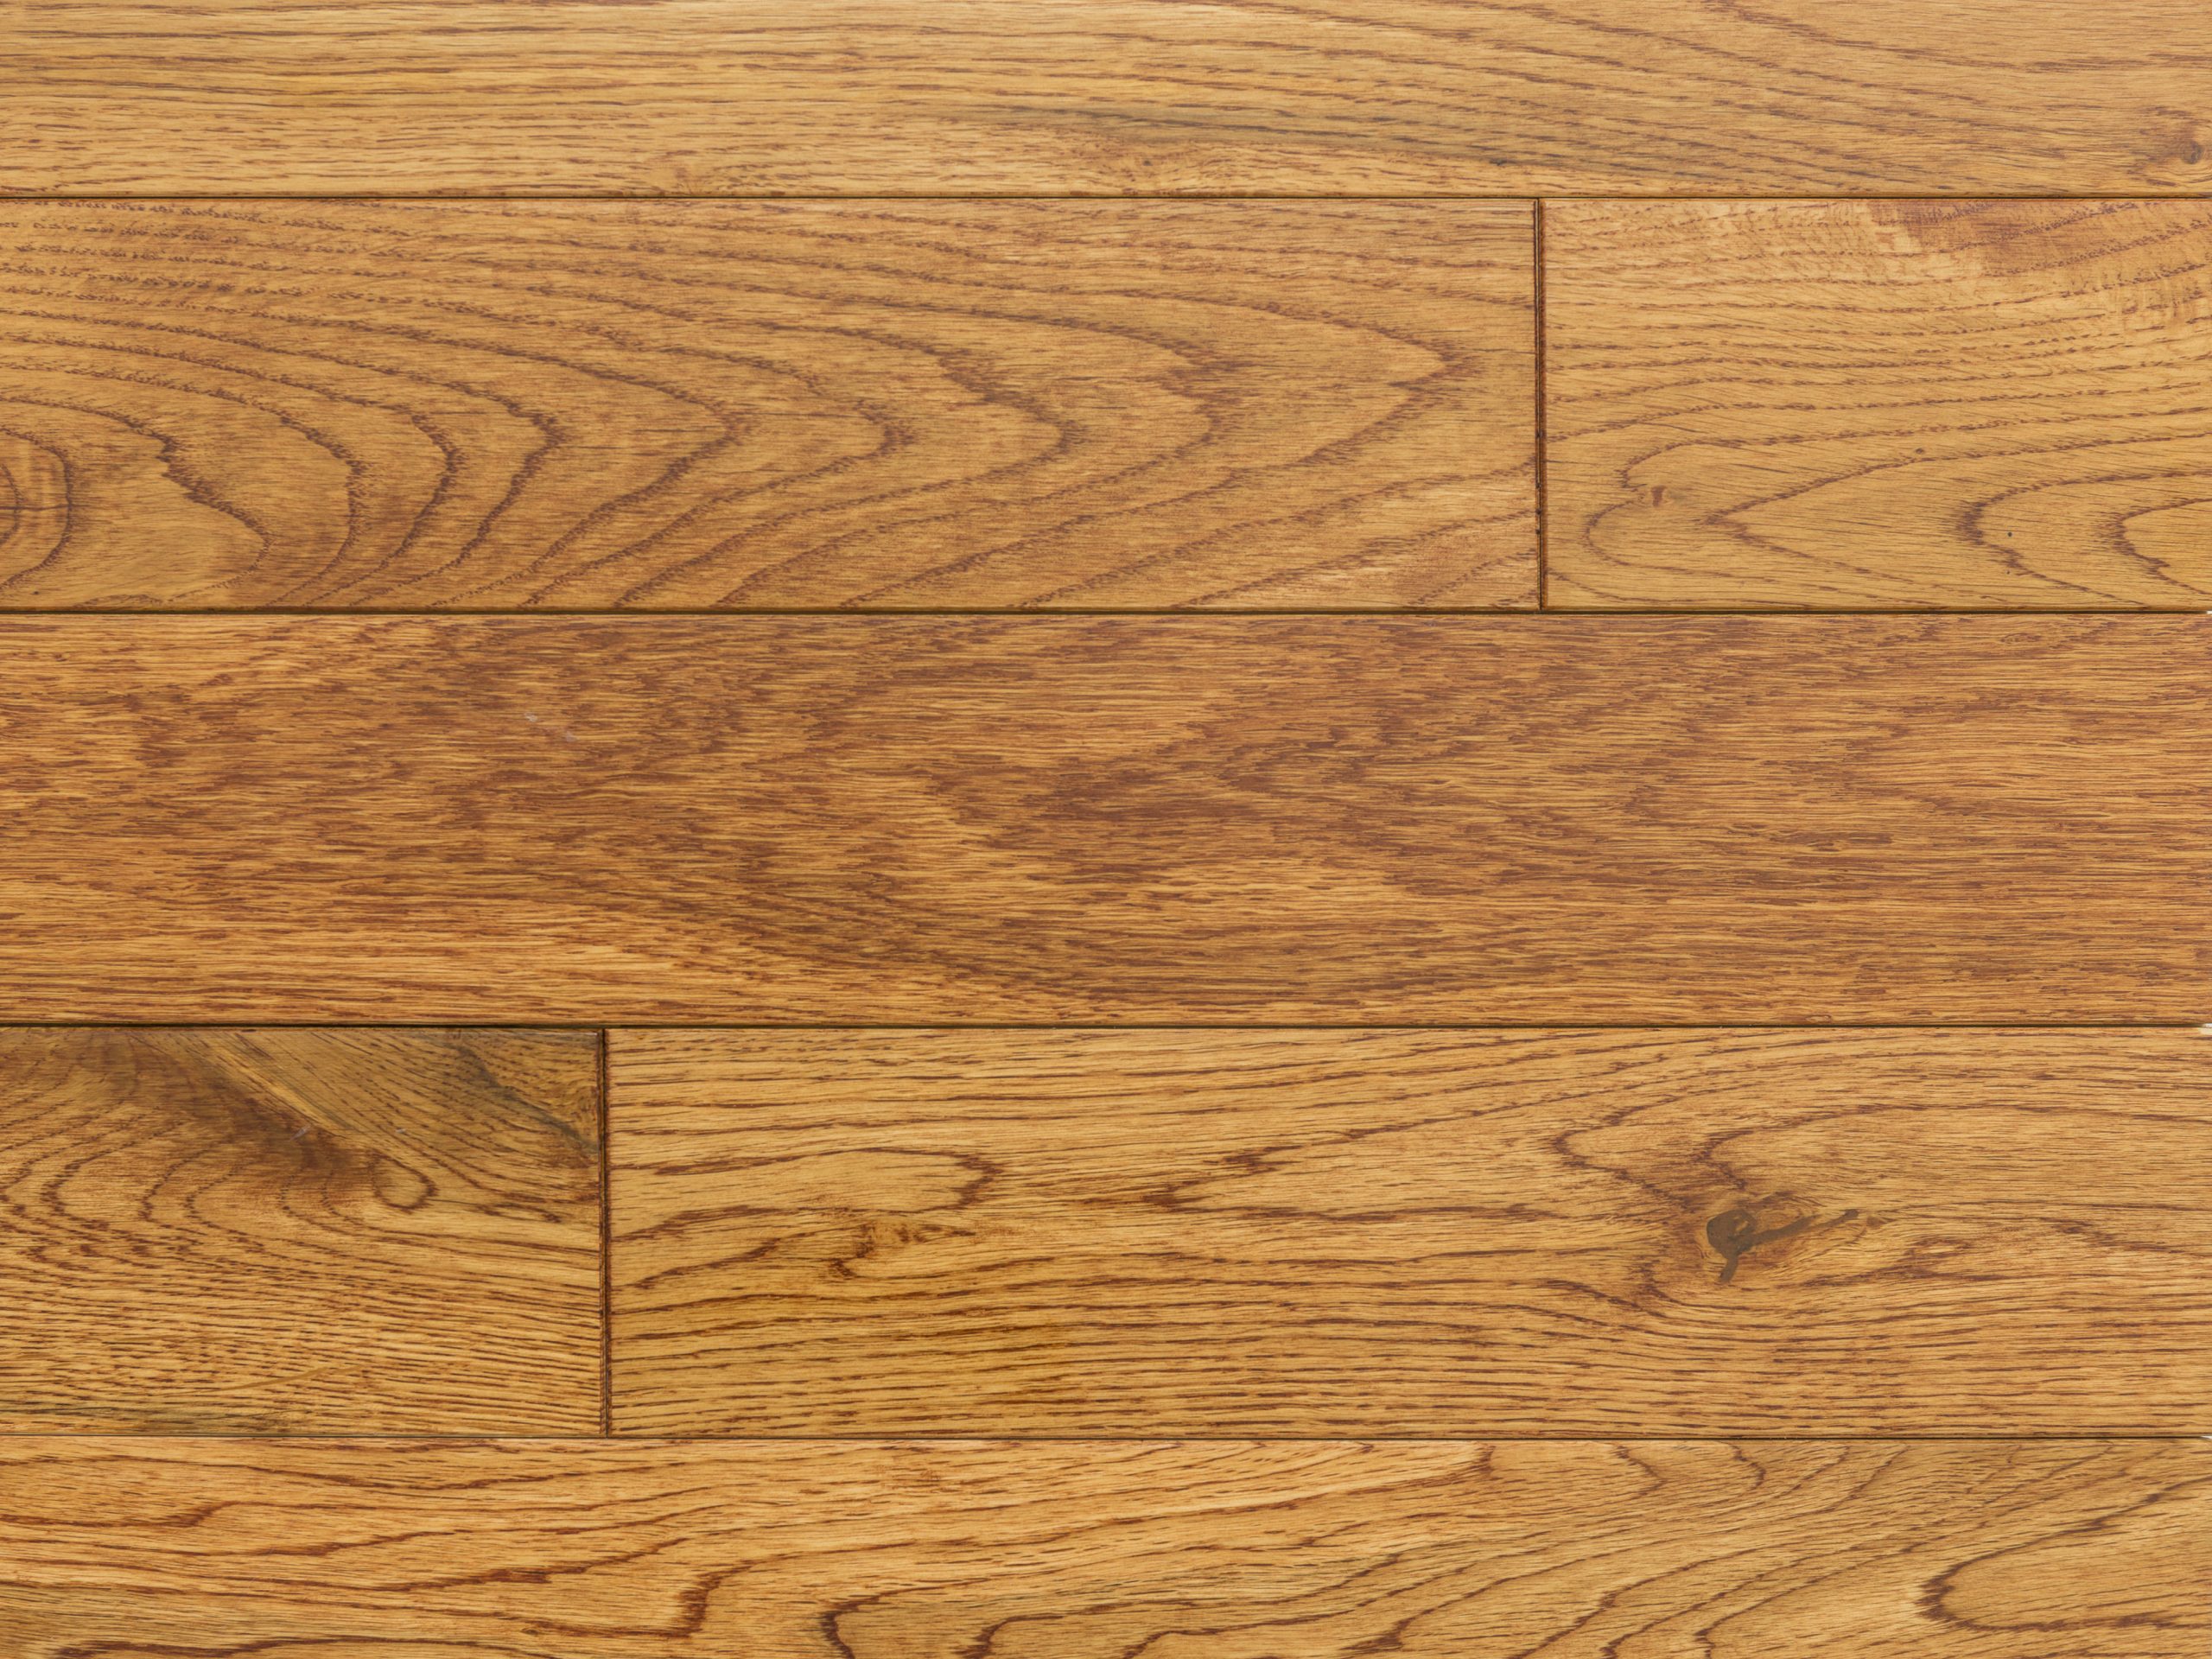 Solid and Engineered Hardwood flooring